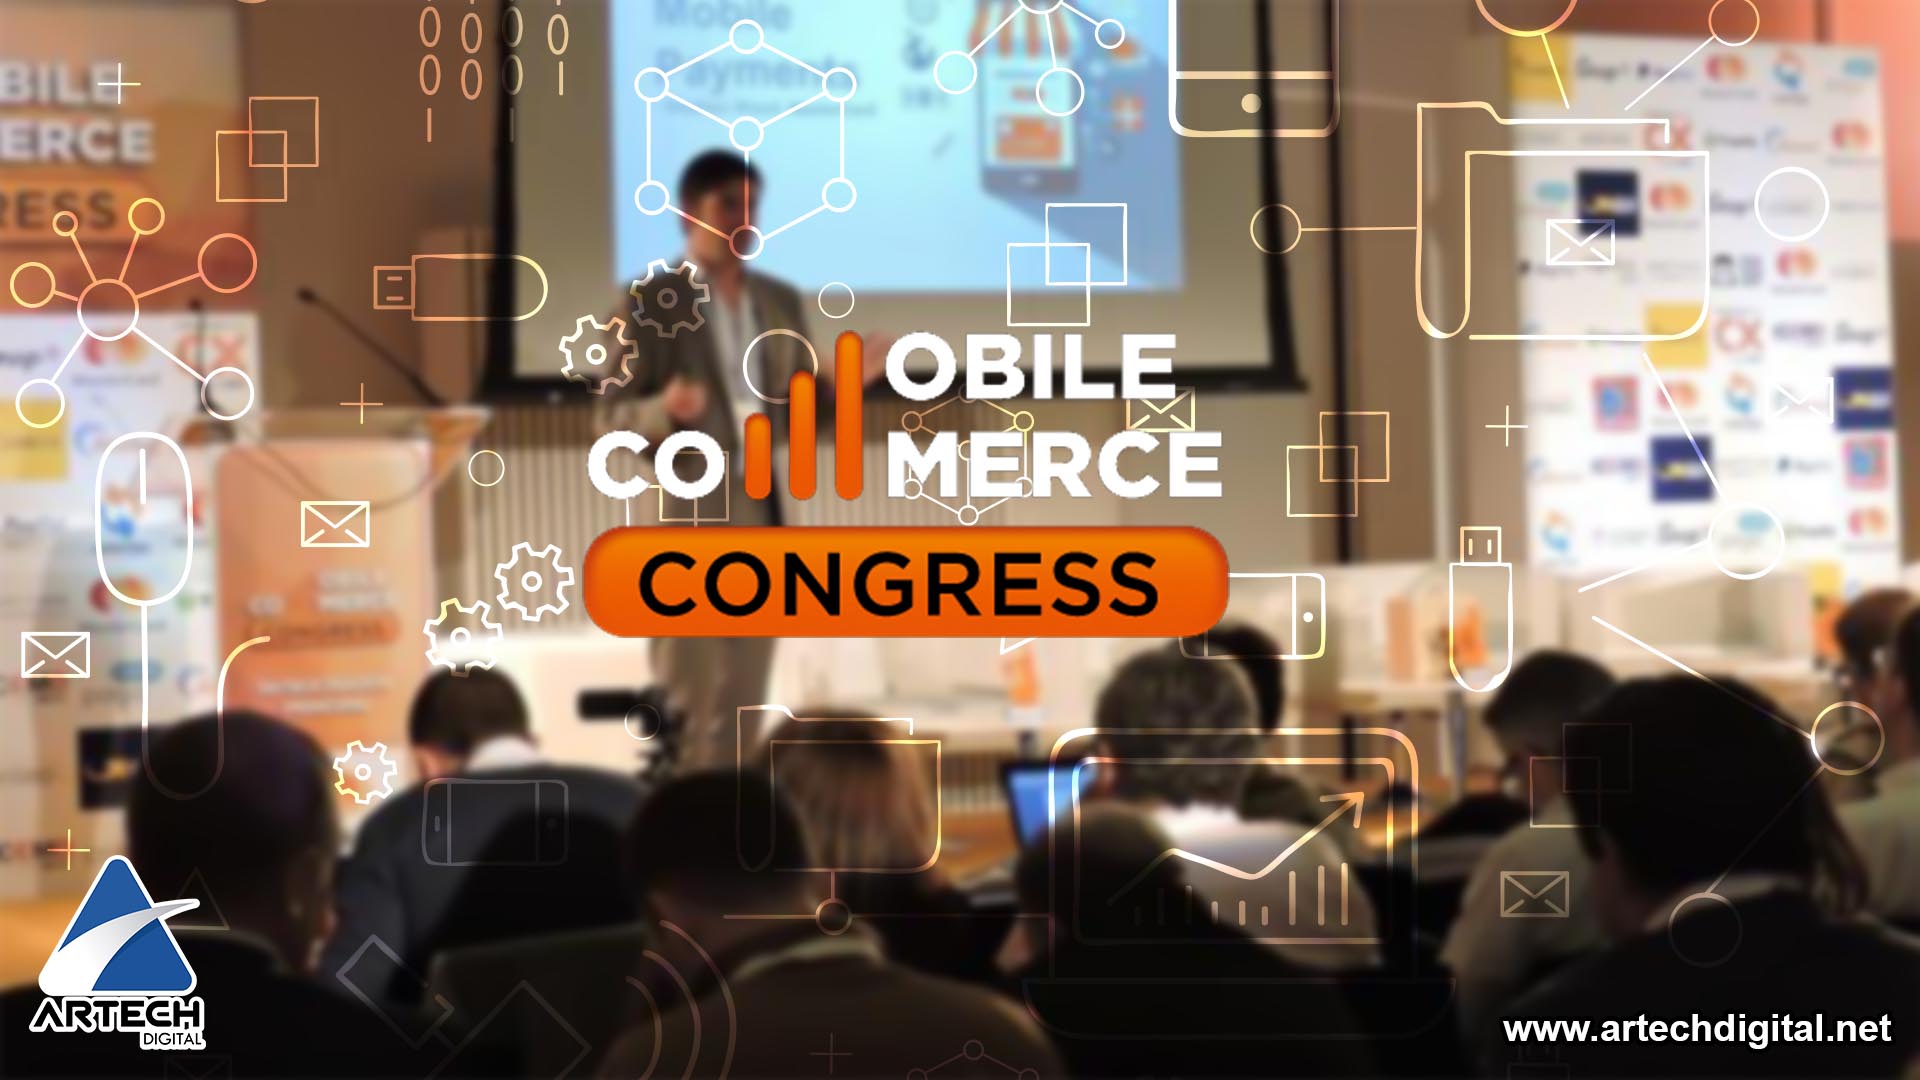 Mobile Commerce Congress - Artech Digital 